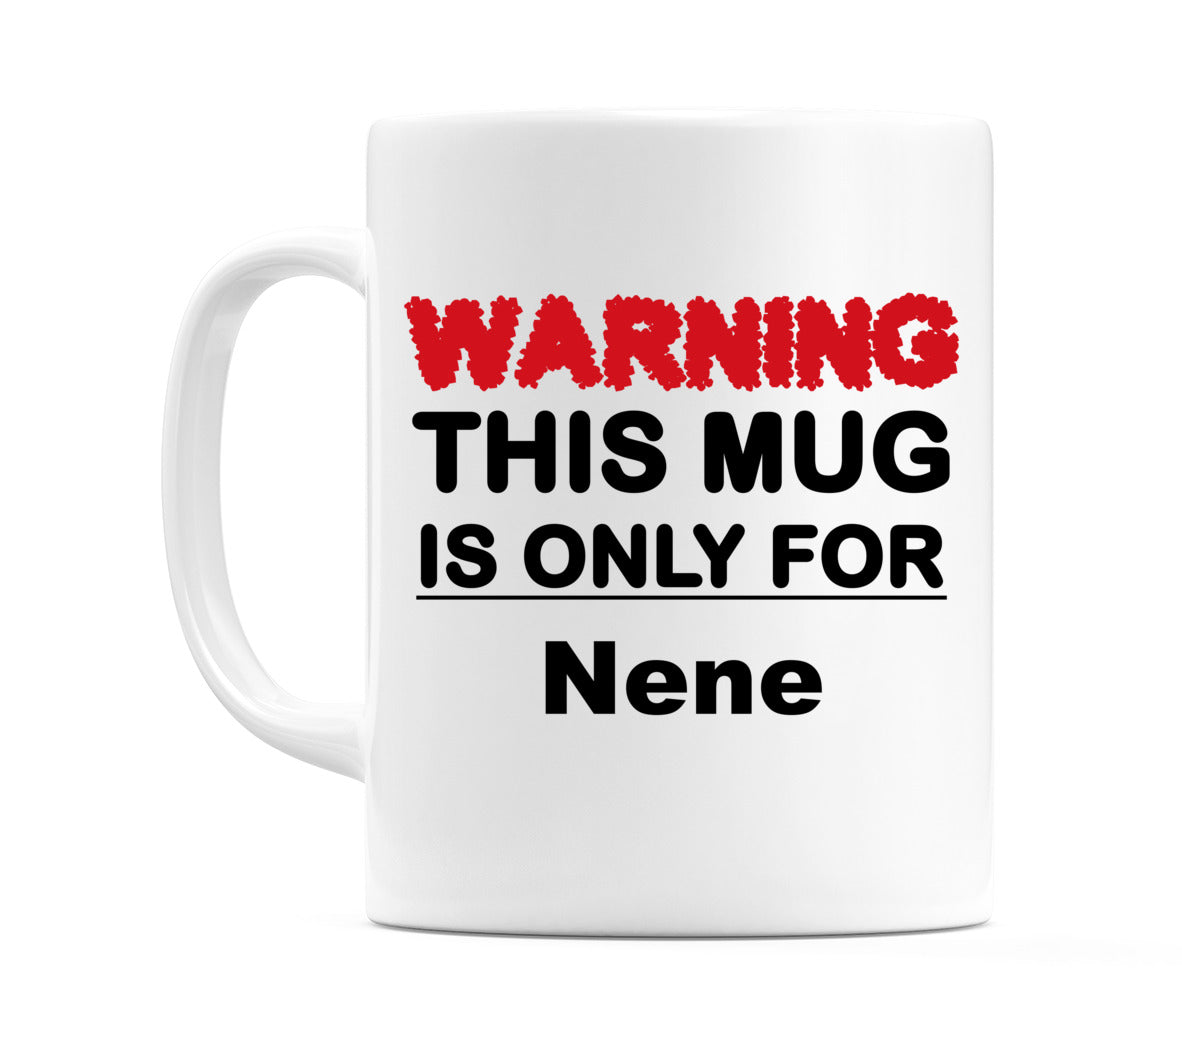 Warning This Mug is ONLY for Nene Mug